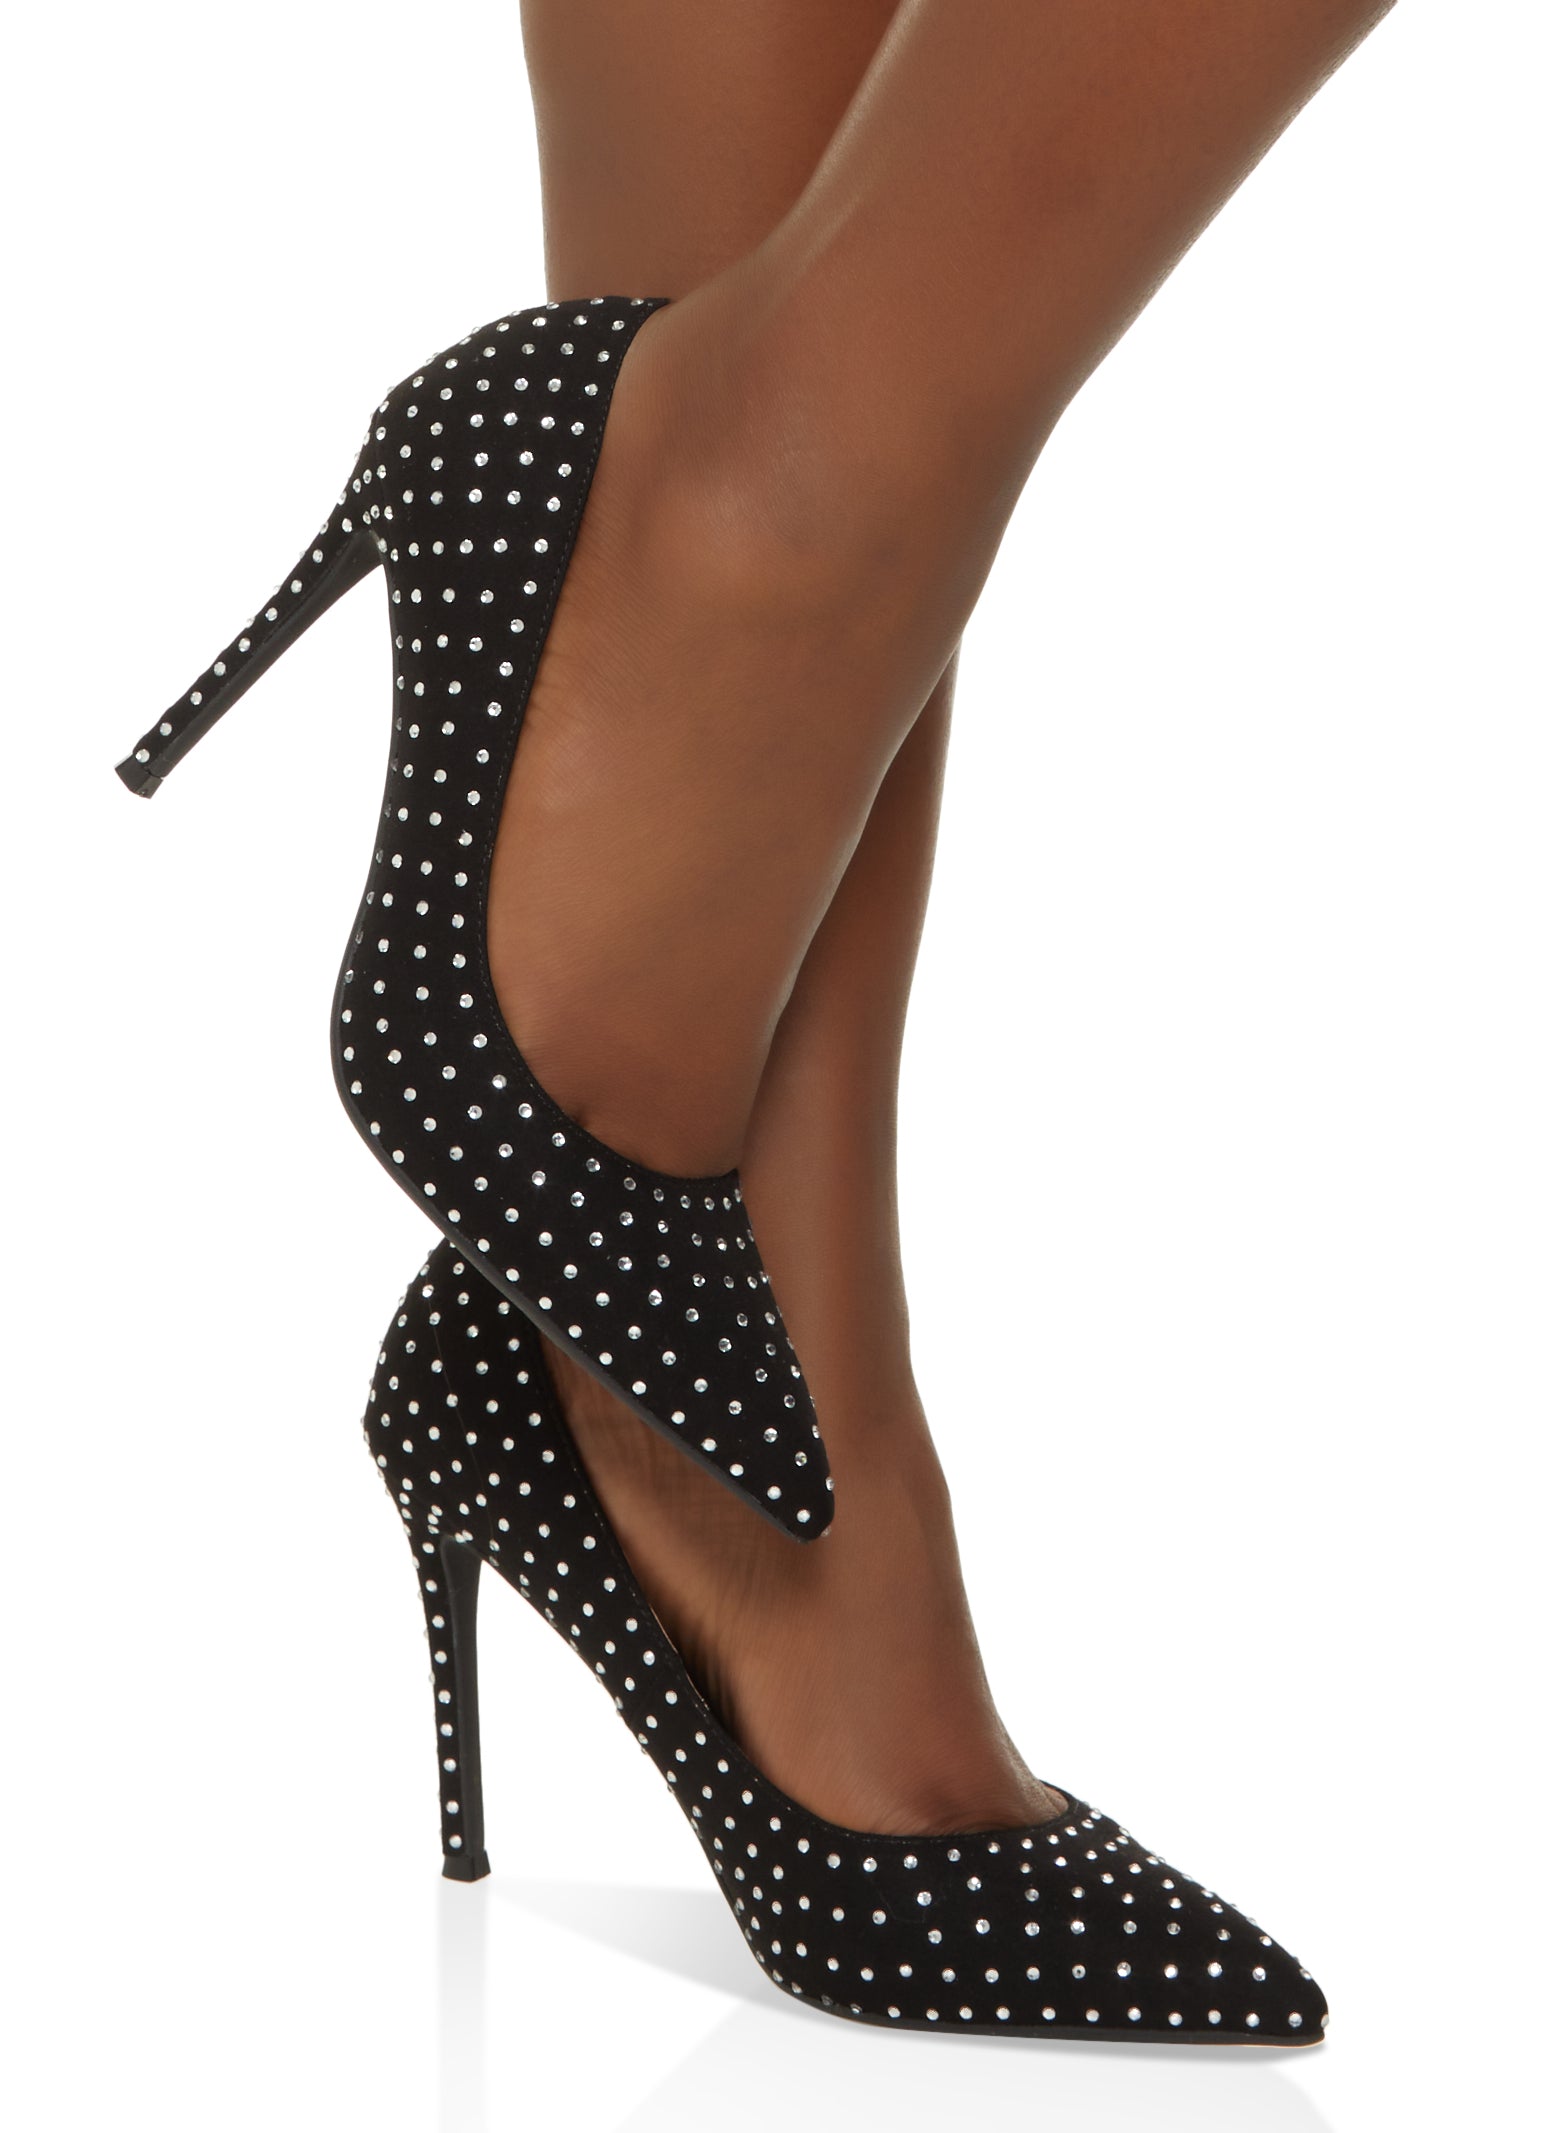 Bridal Satin Court Shoes 4 inches Stilettos Slip-On High Heel Pumps | Heels,  Pumps heels, High heel pumps